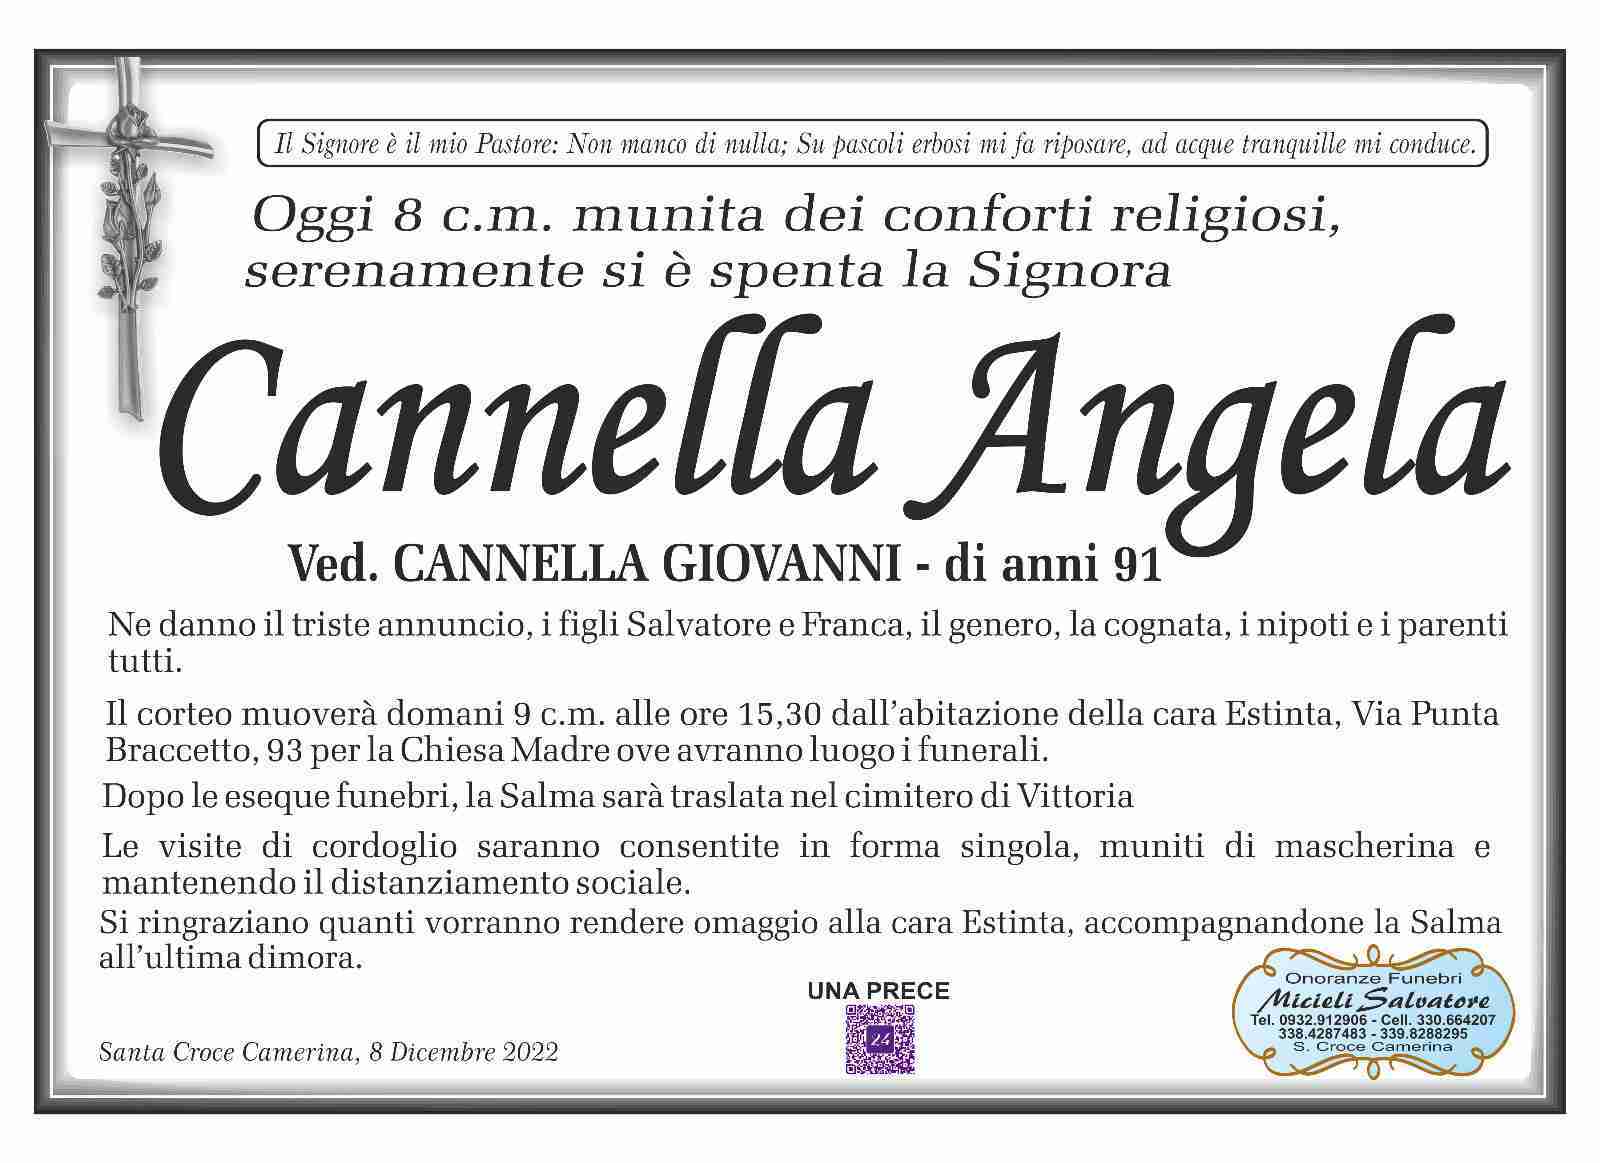 Angela Cannella